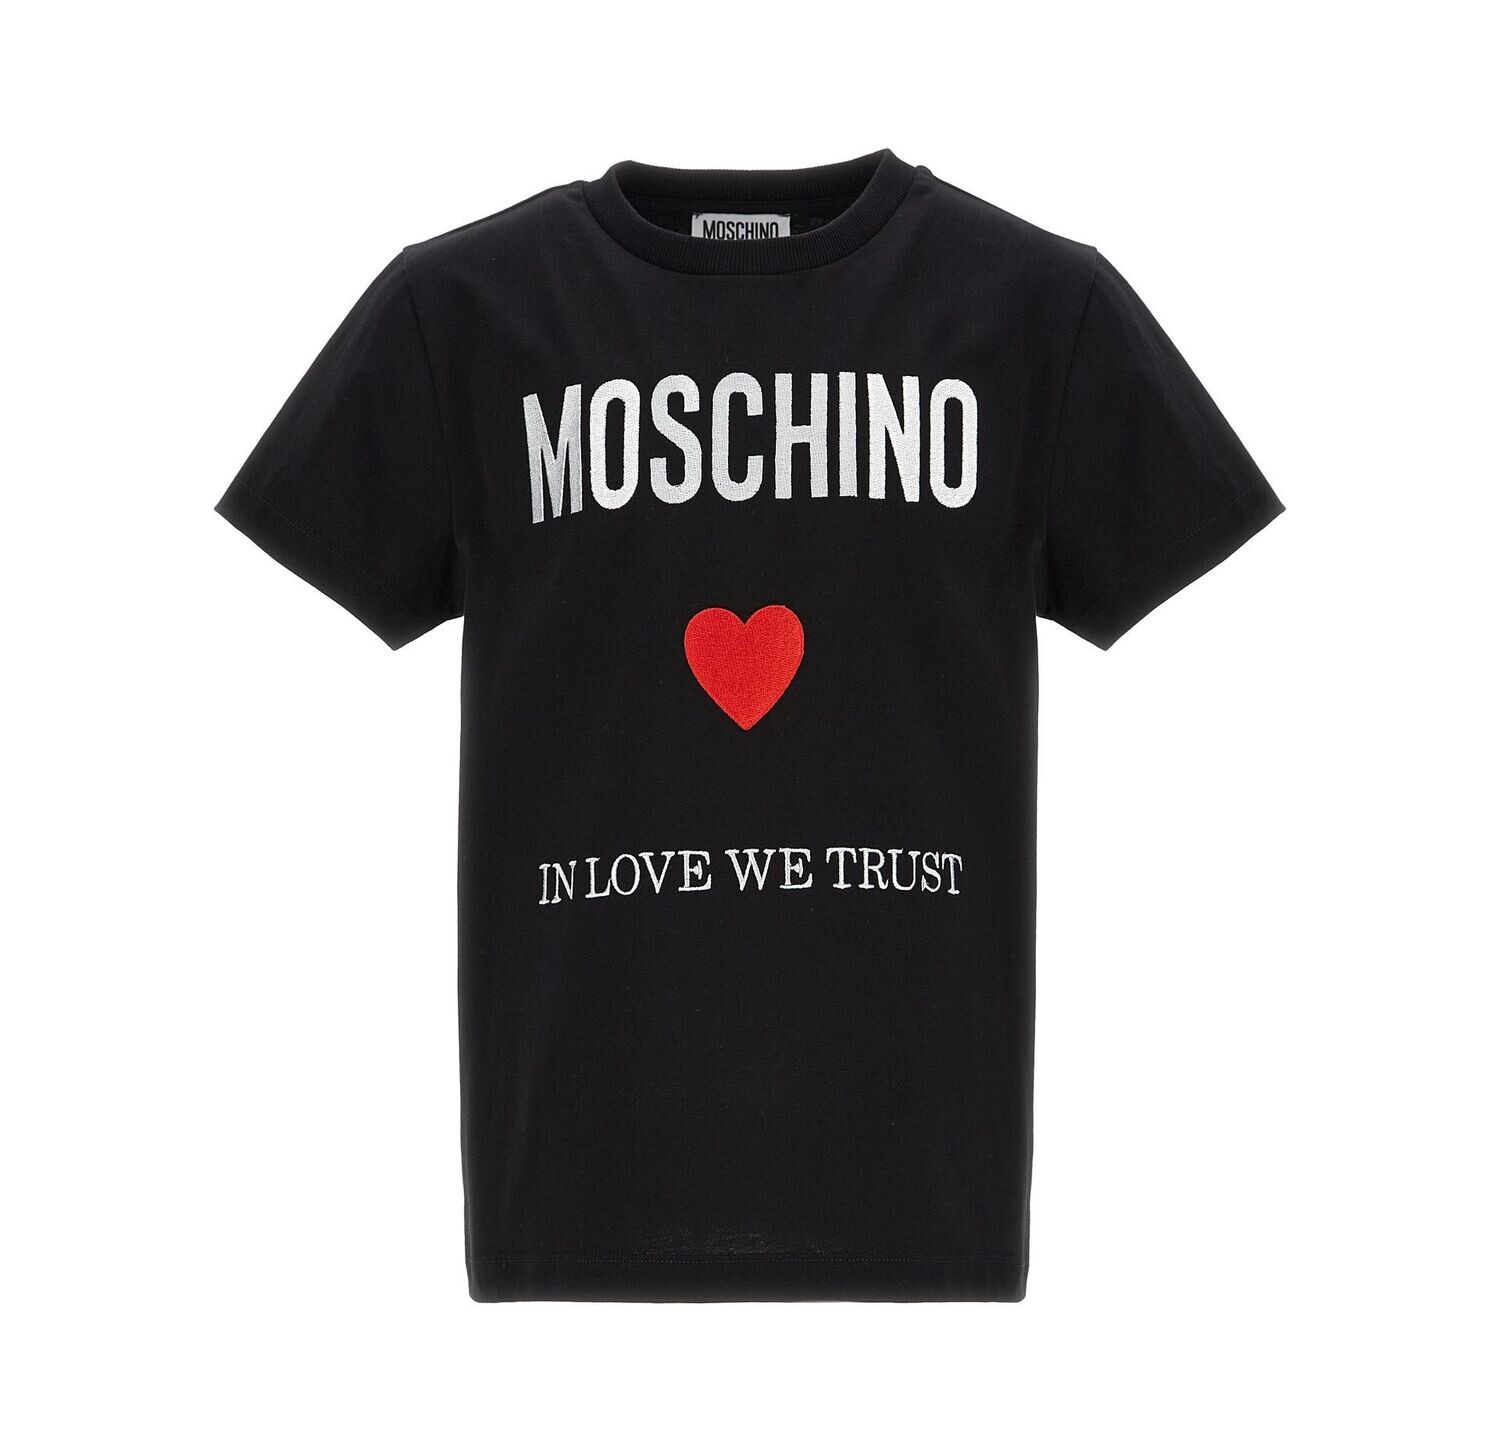 Moschino - T-shirt nera logo e cuore, Size: 12 anni